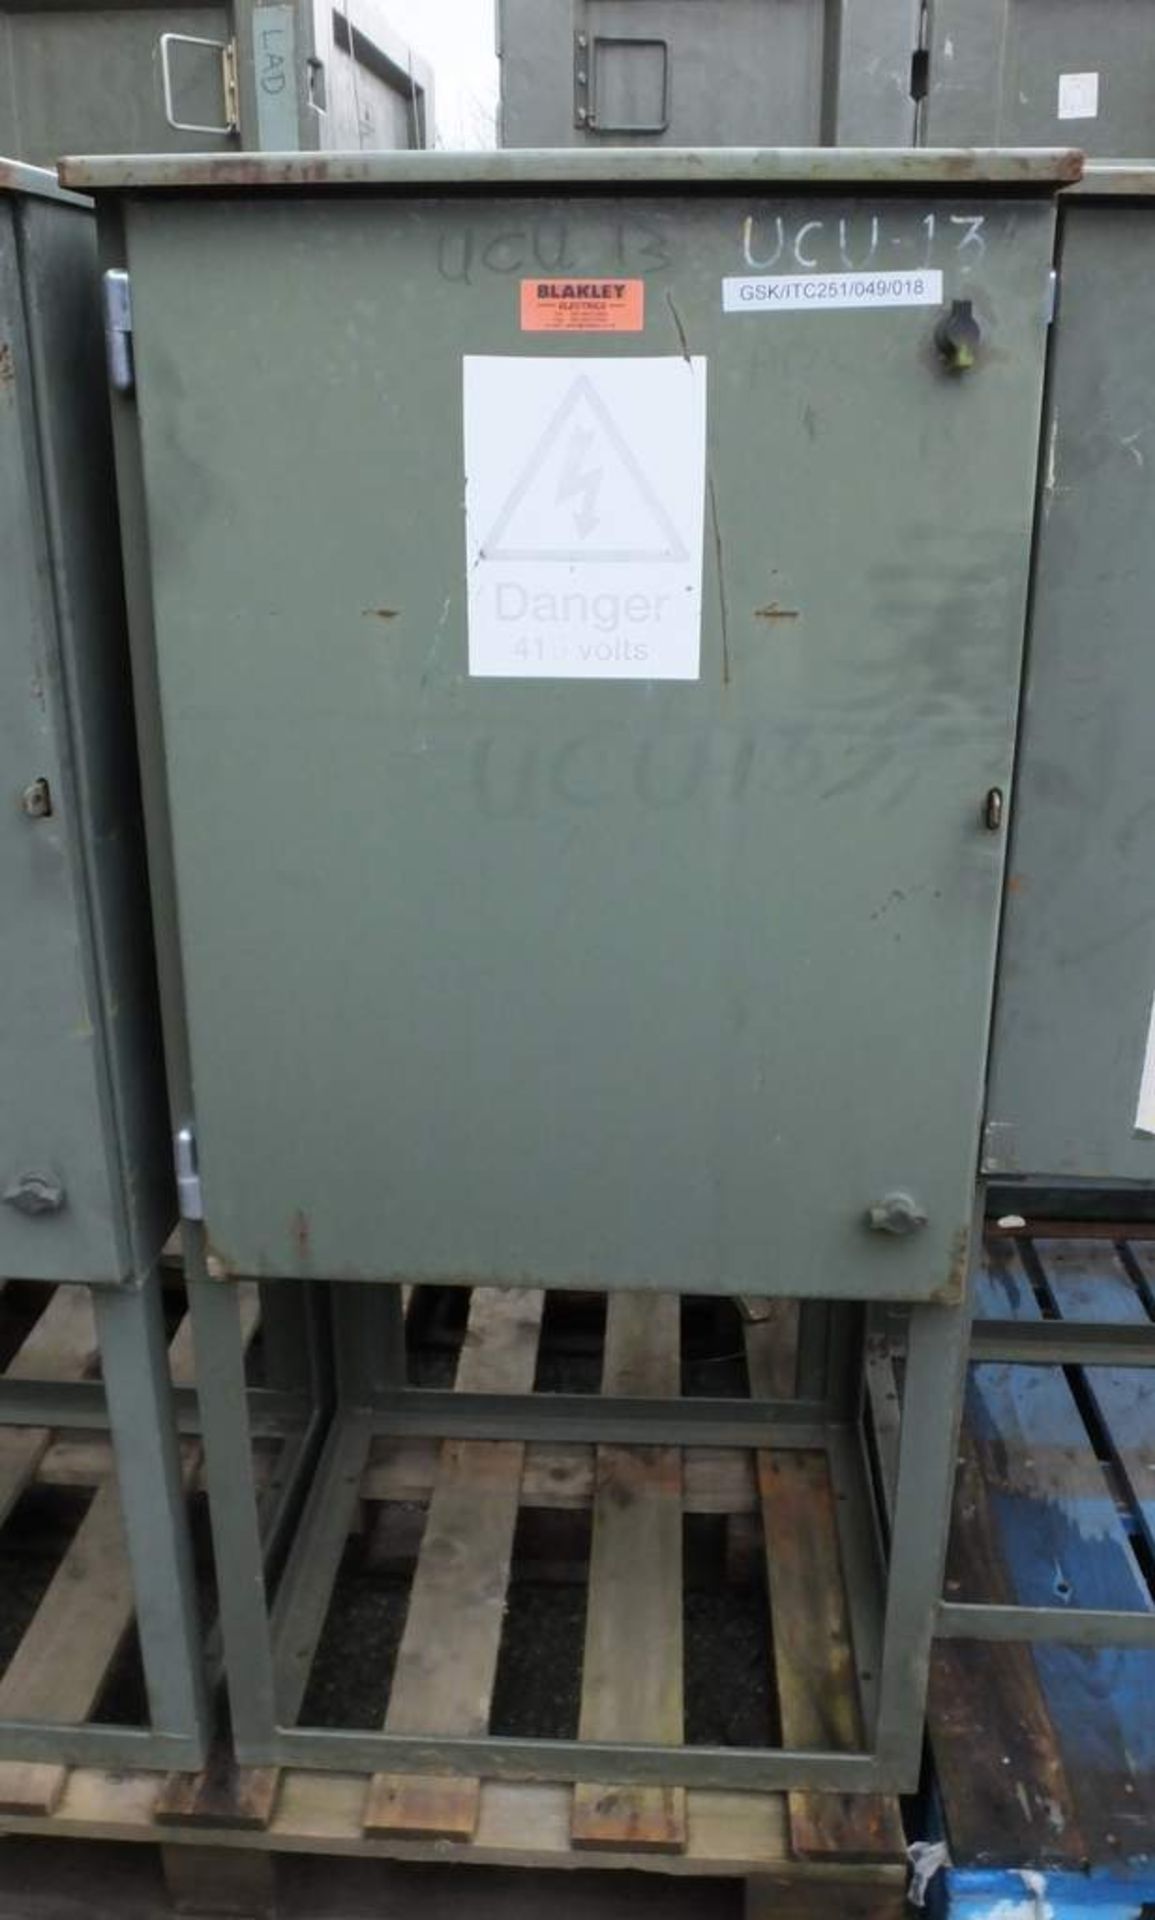 Lewden UCU 415v power distribution boxes